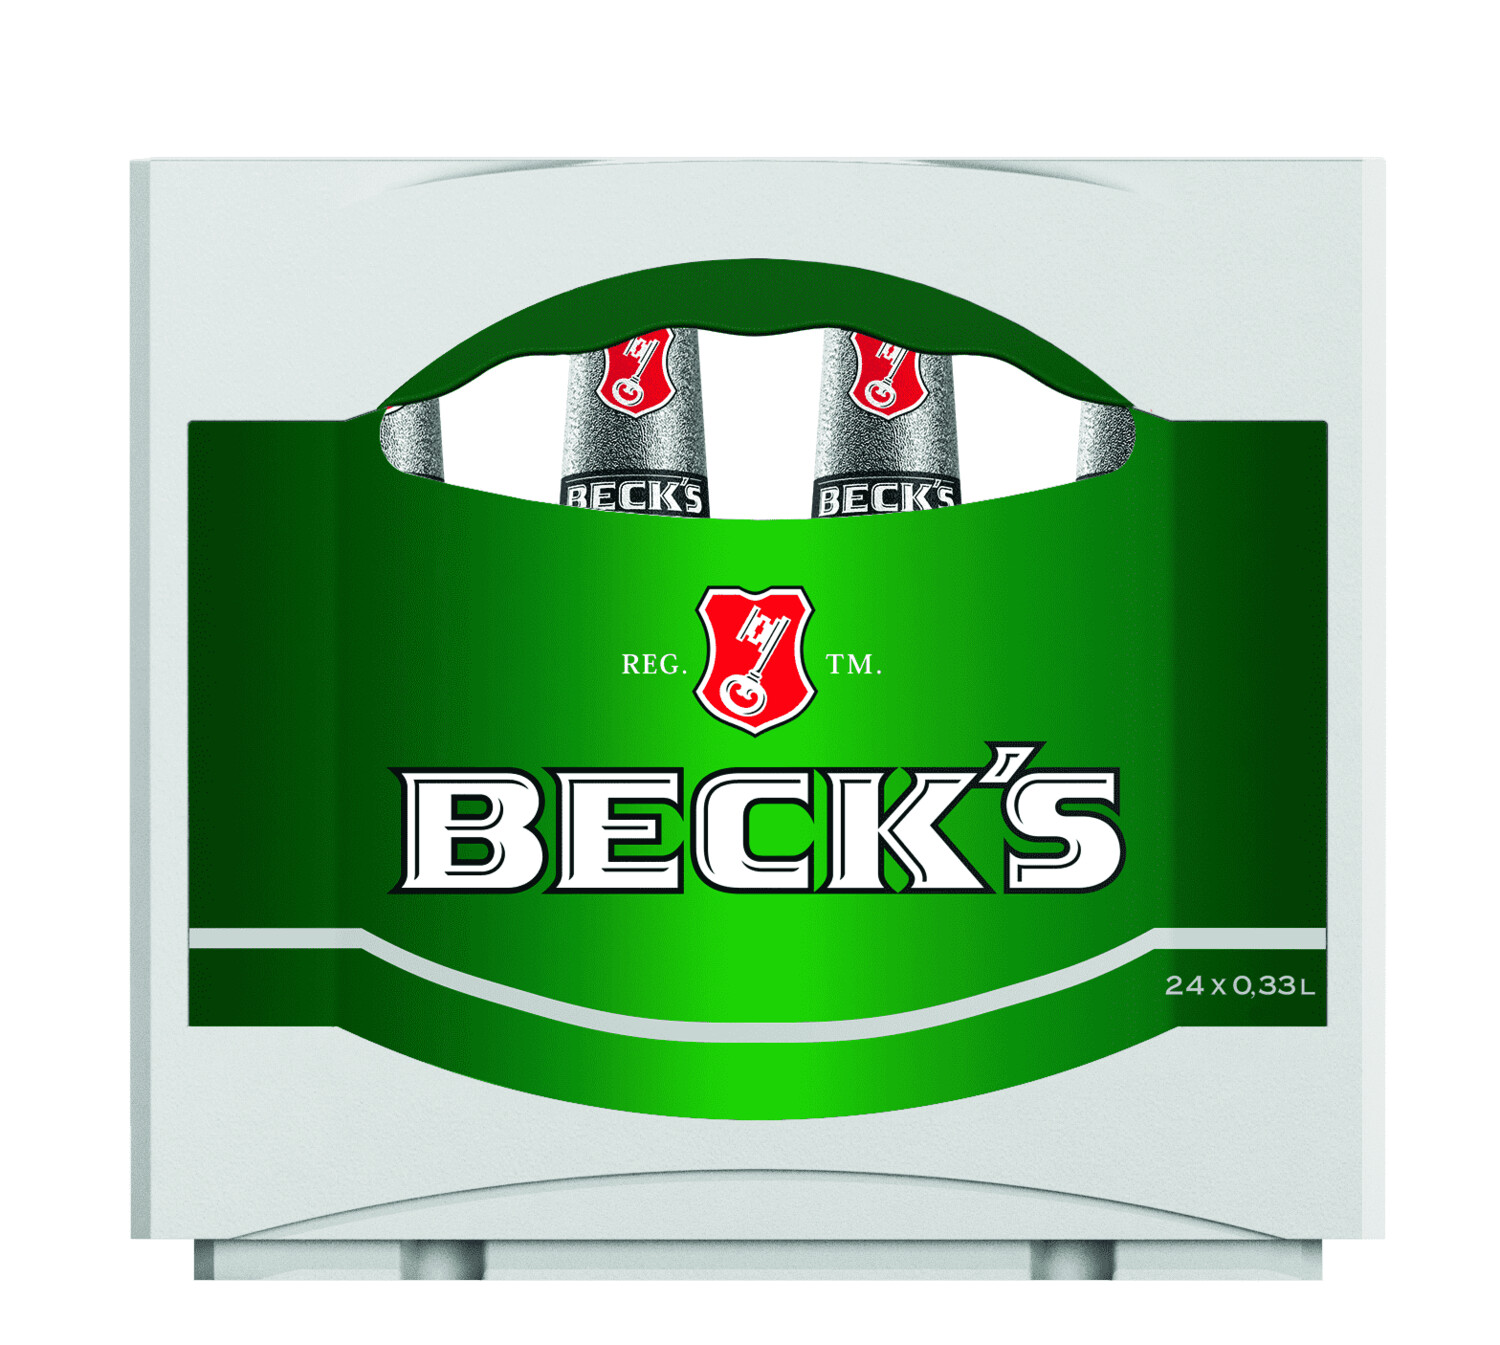 Becks Blue alkoholfrei
(24x 0,33l FL Glas 19,75 € inkl. MwSt. zzgl. Pfand)